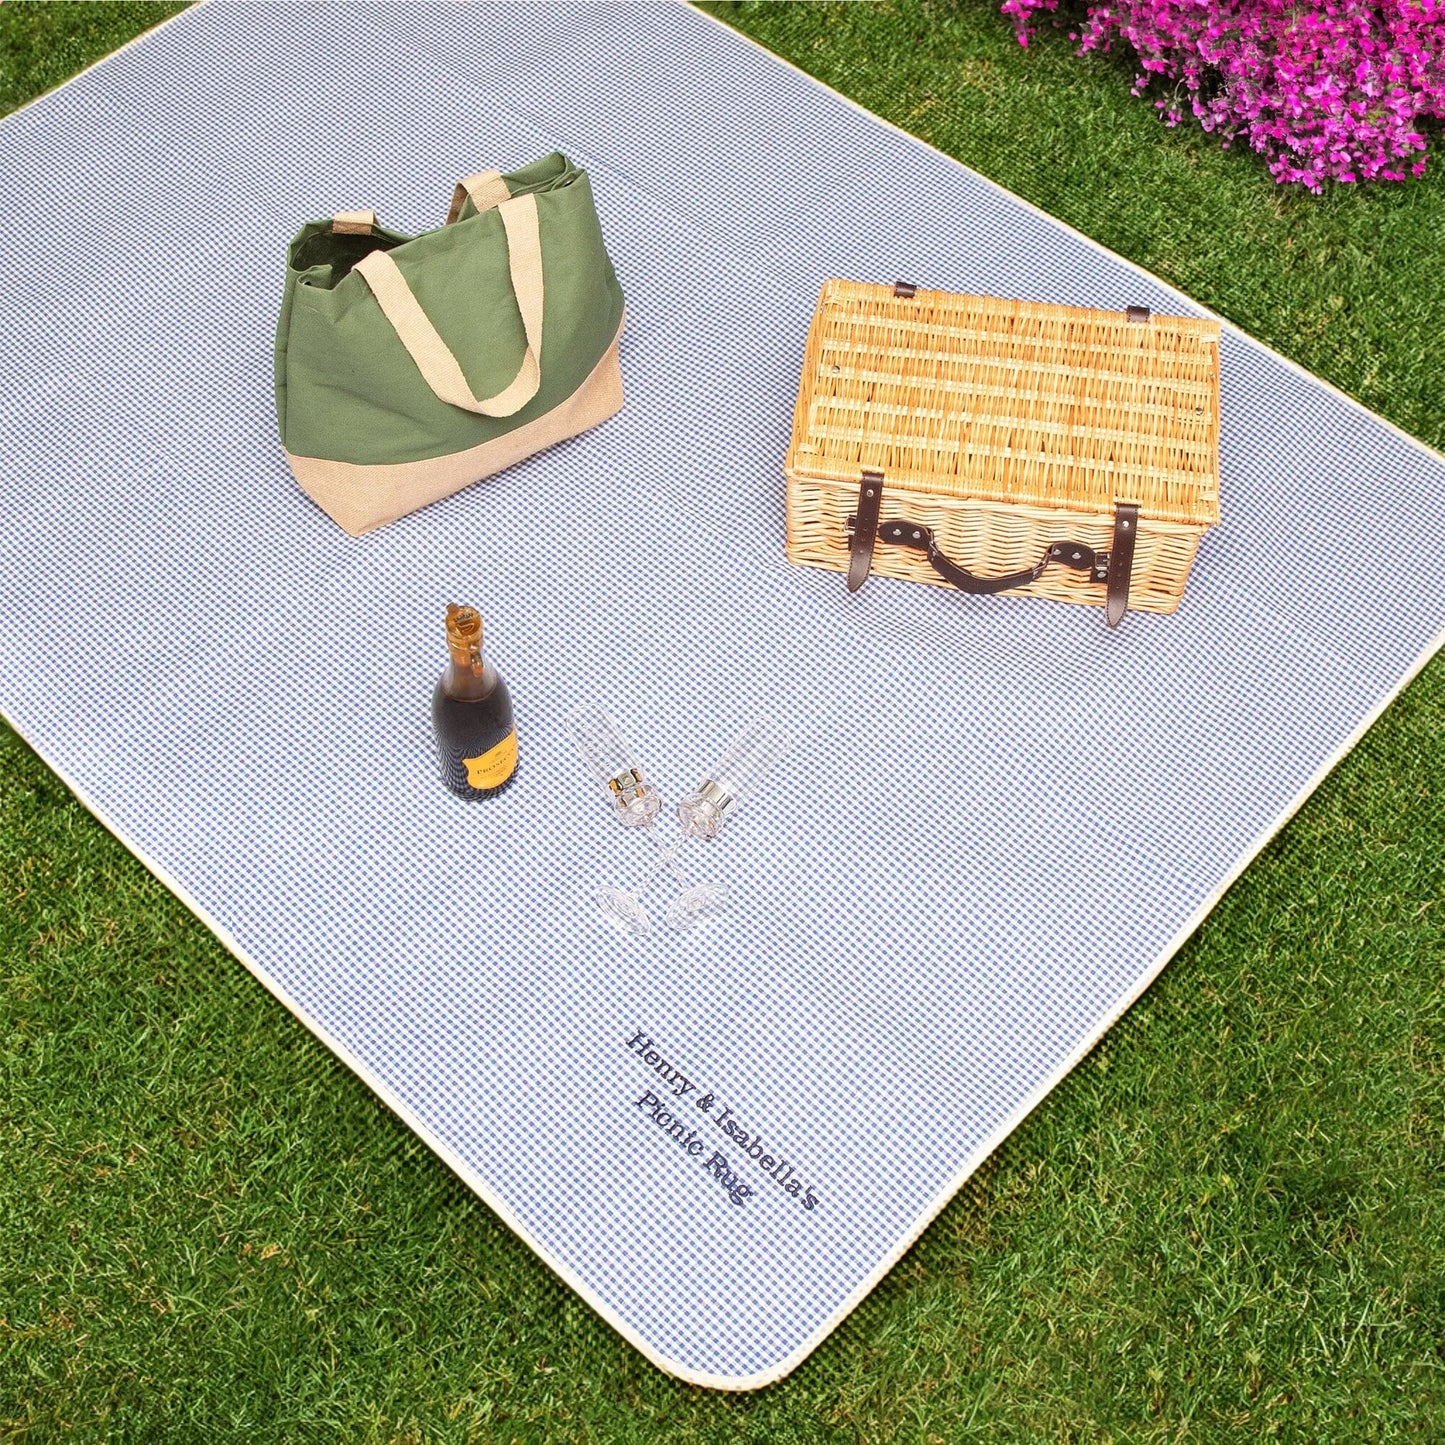 personalised picnic blanket